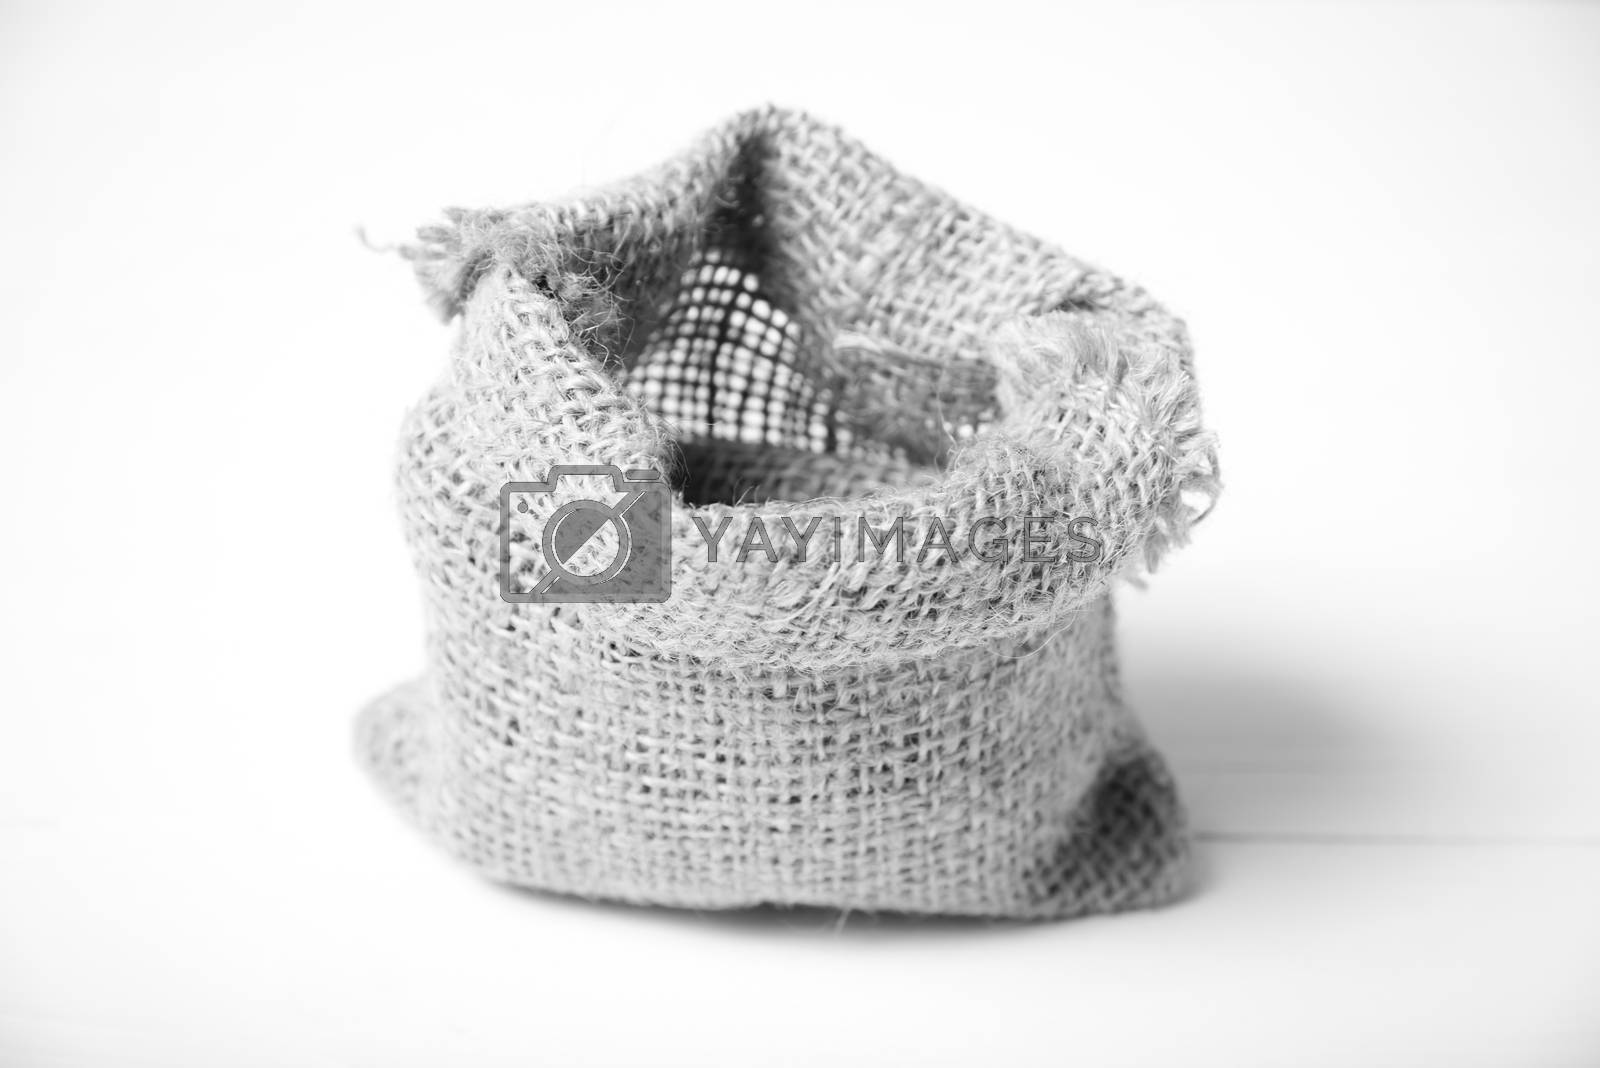 Royalty free image of sack bag black and white tone by ammza12